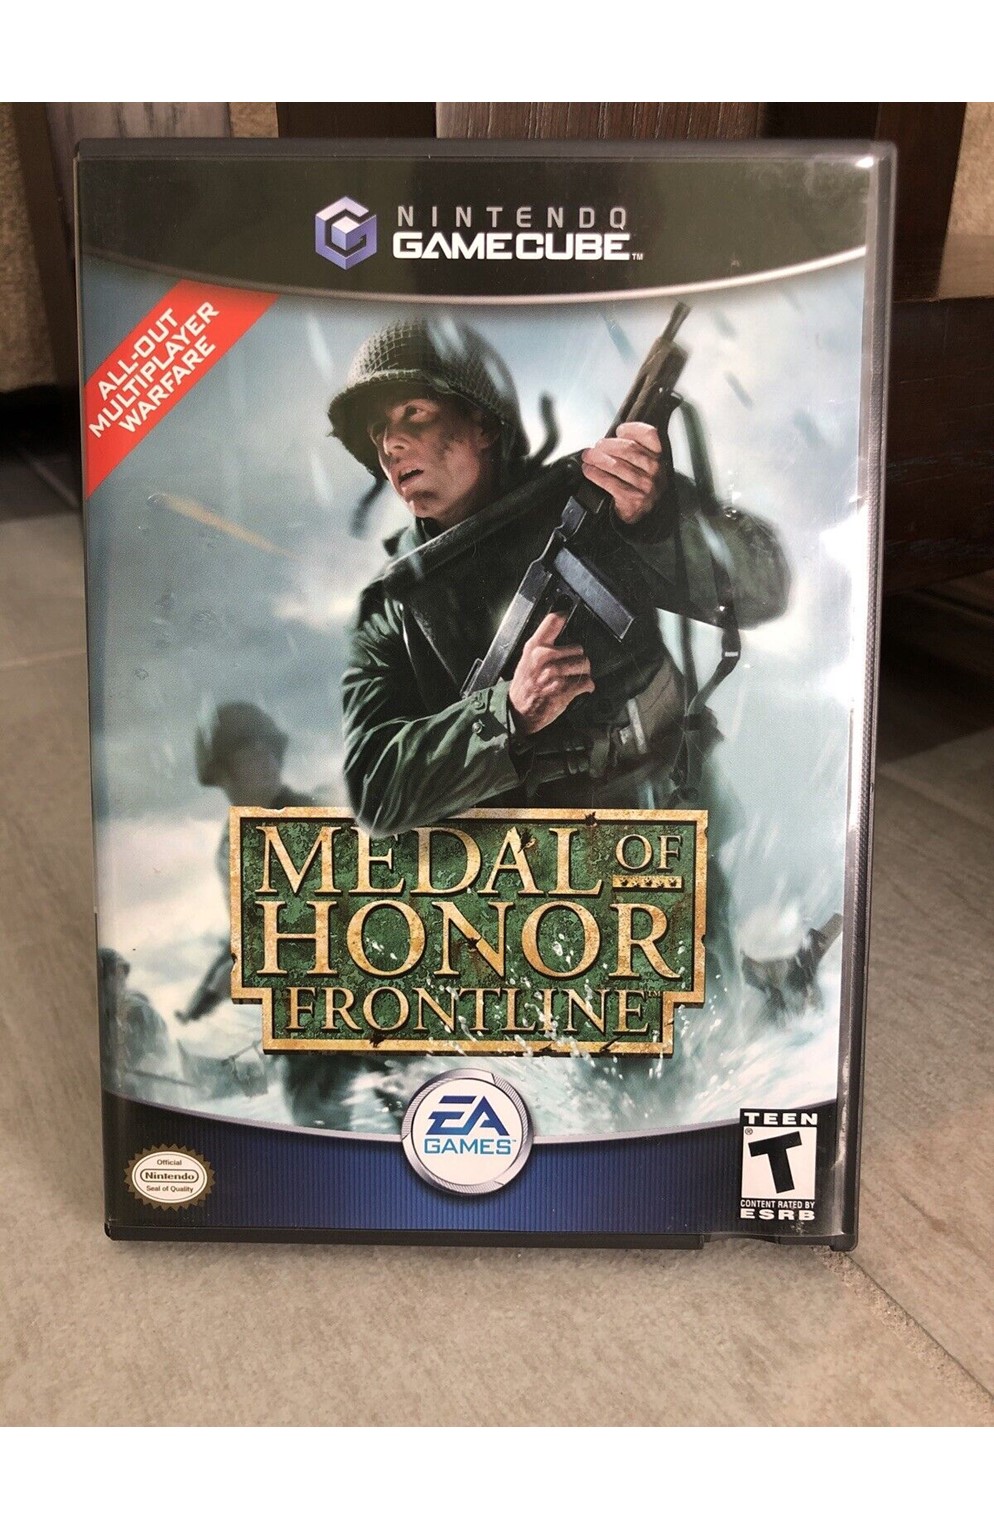 Nintendo Gamecube Gc Medal of Honor Frontline